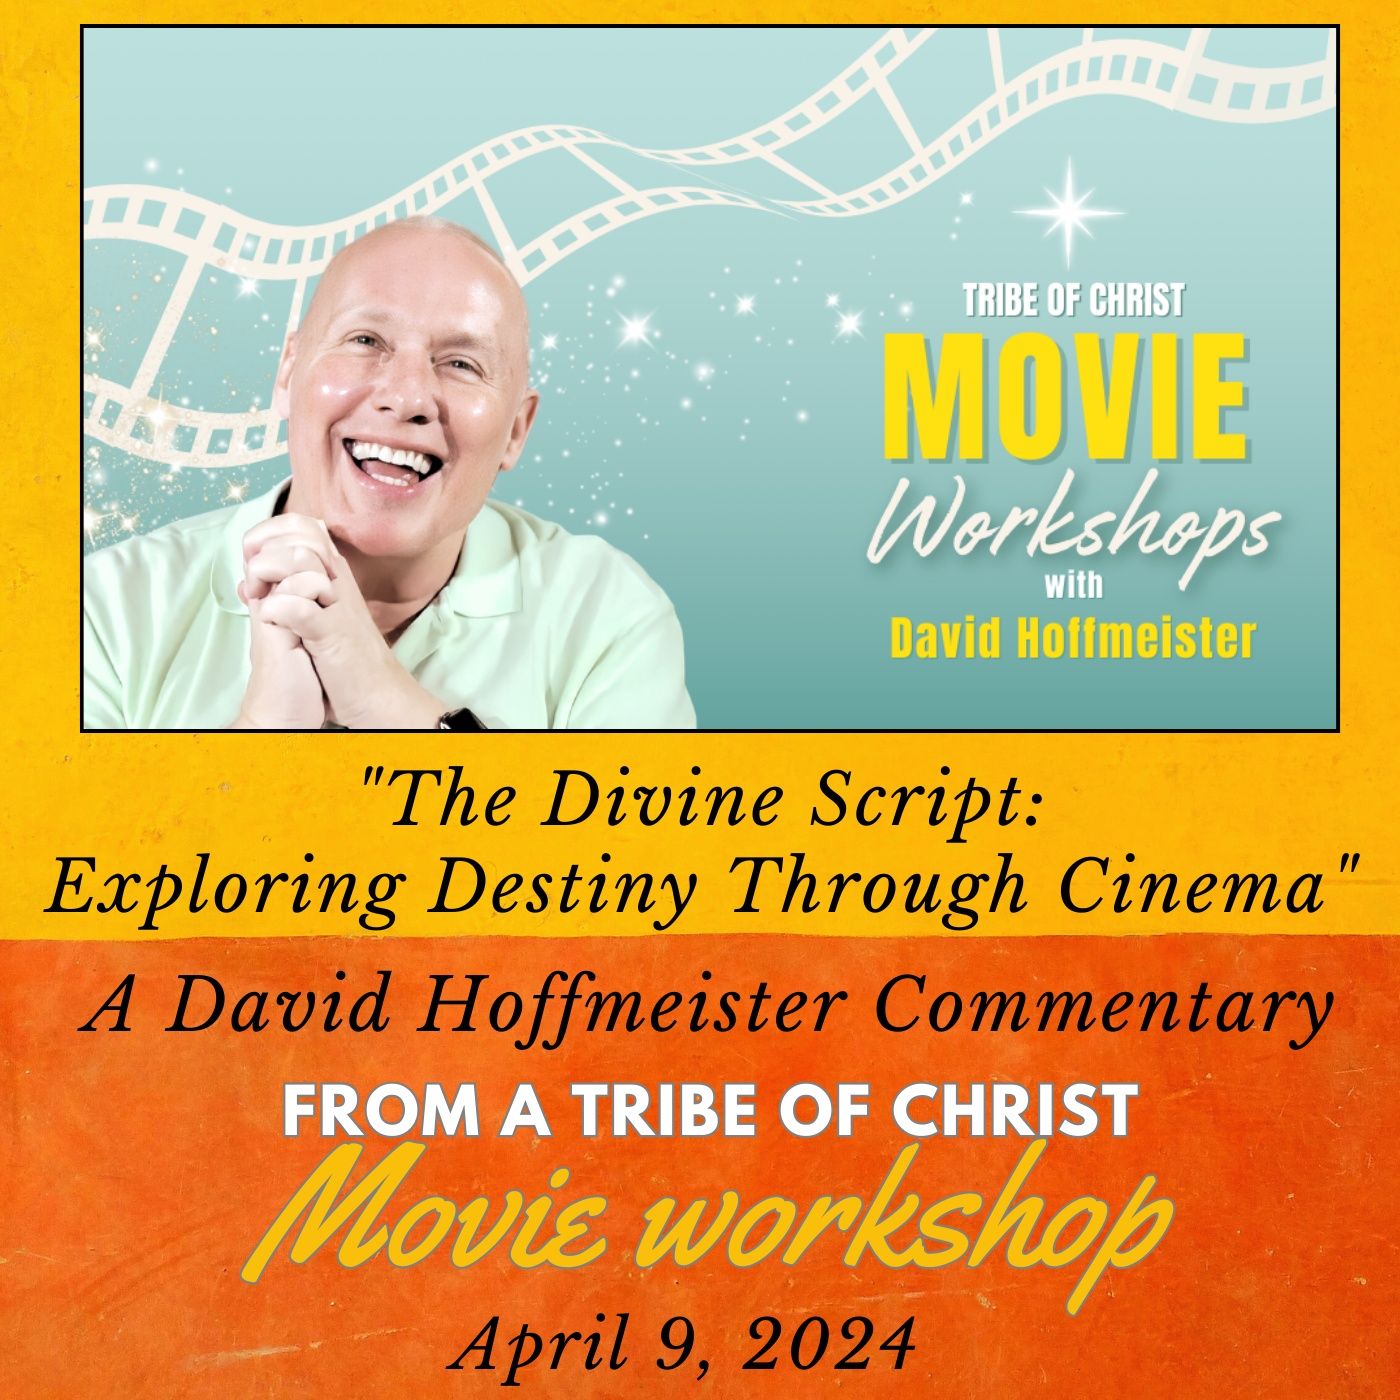 ”The Divine Script: Exploring Destiny Through Cinema” - A Tribe of Christ Movie Workshop with David Hoffmeister